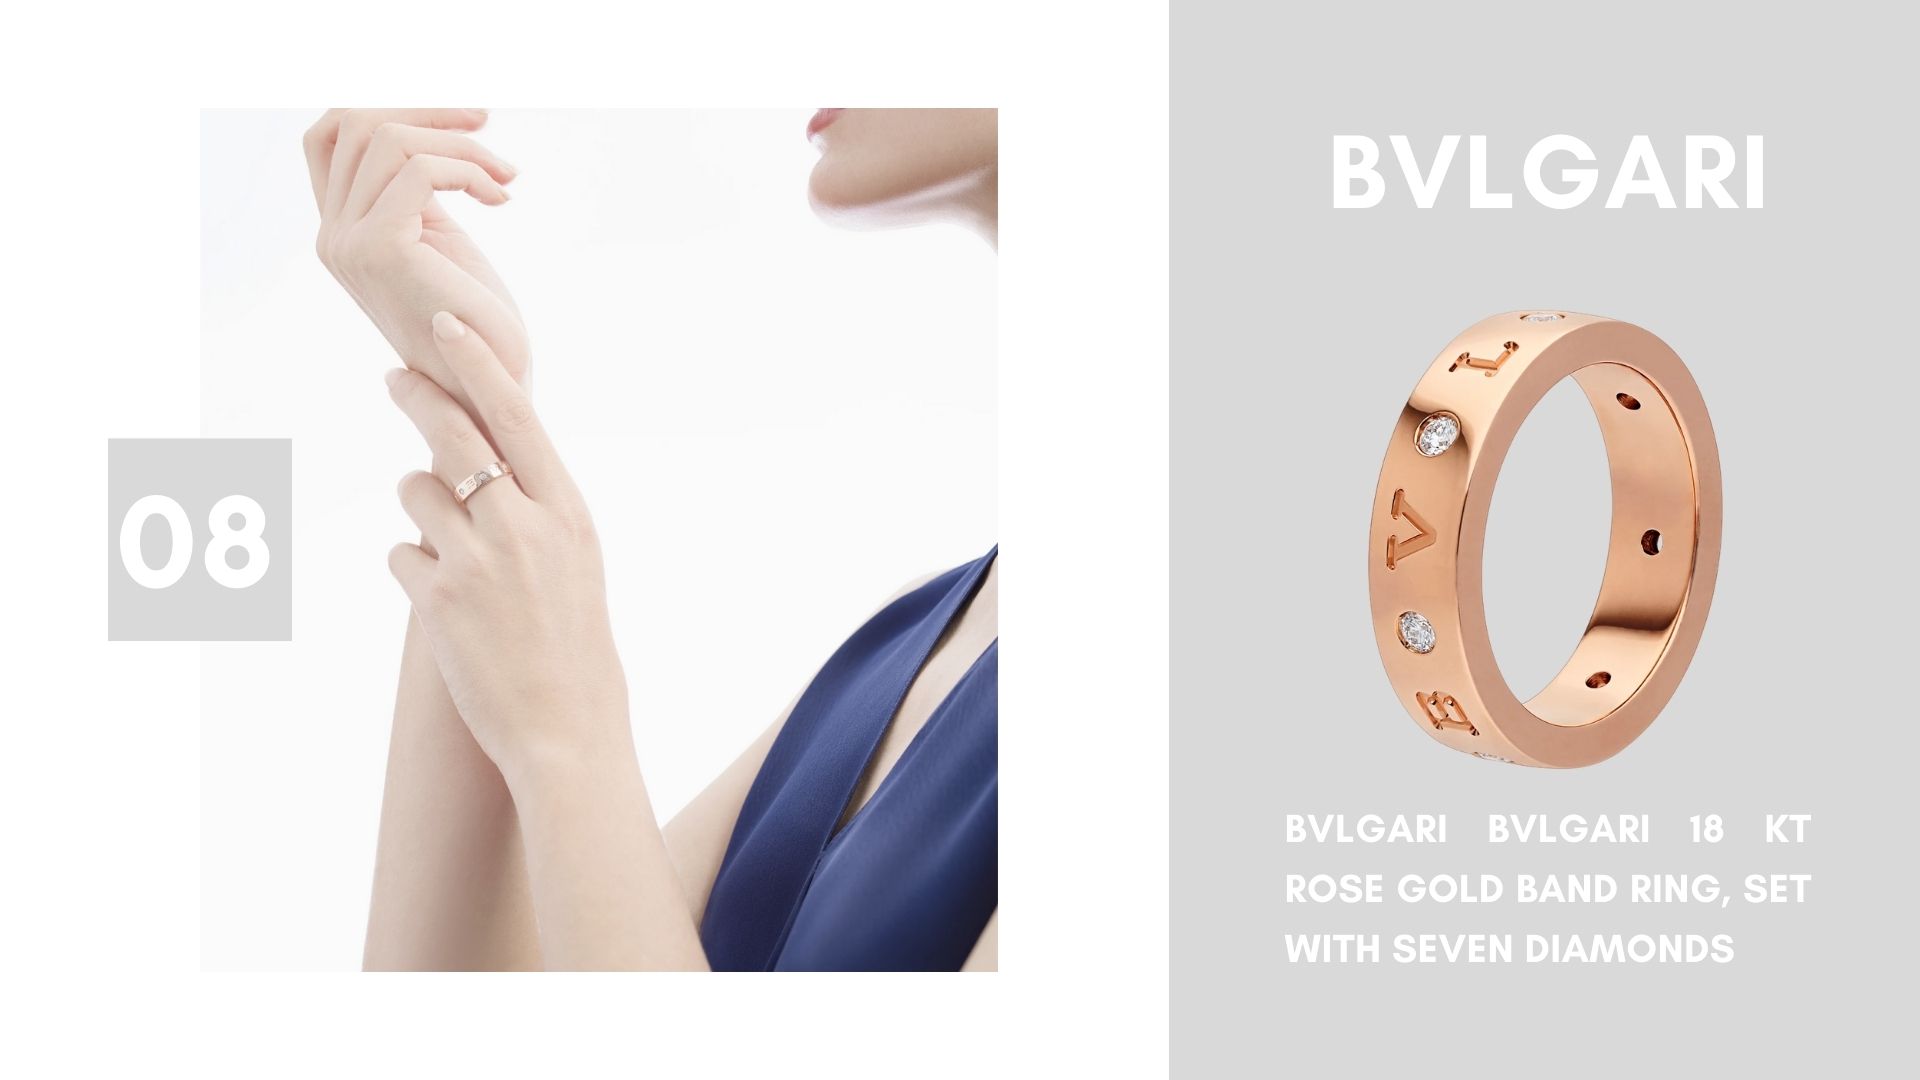 BVLGARI 18 kt rose gold band ring, set with seven diamonds รวมแหวน Bvlgari น่าจับตามอง 2020 